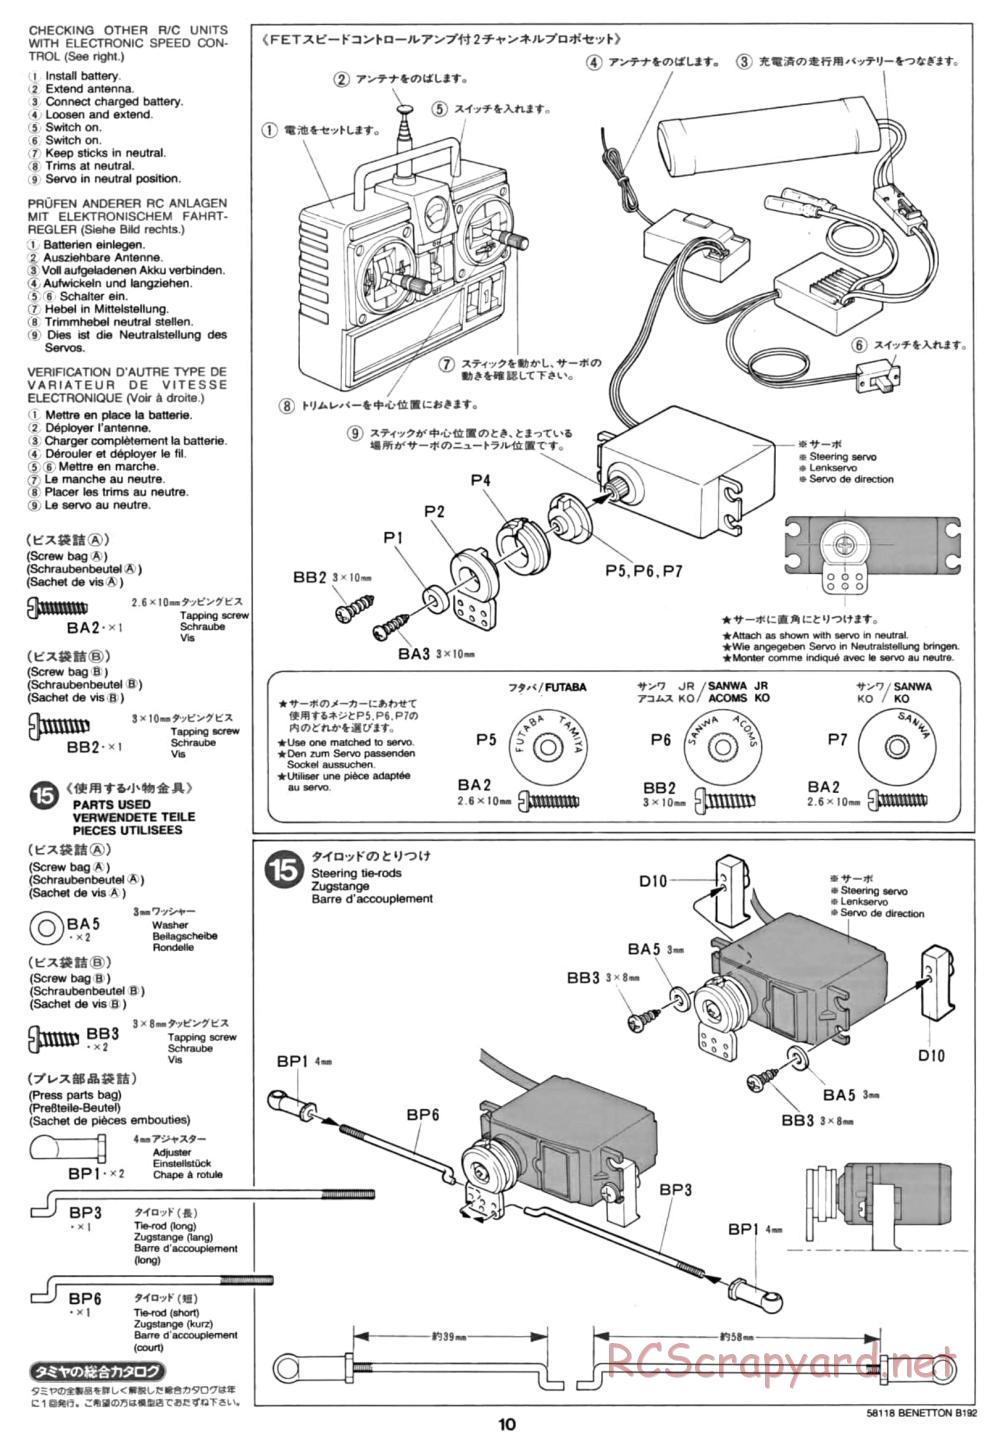 Tamiya - Benetton B192 - F102 Chassis - Manual - Page 10